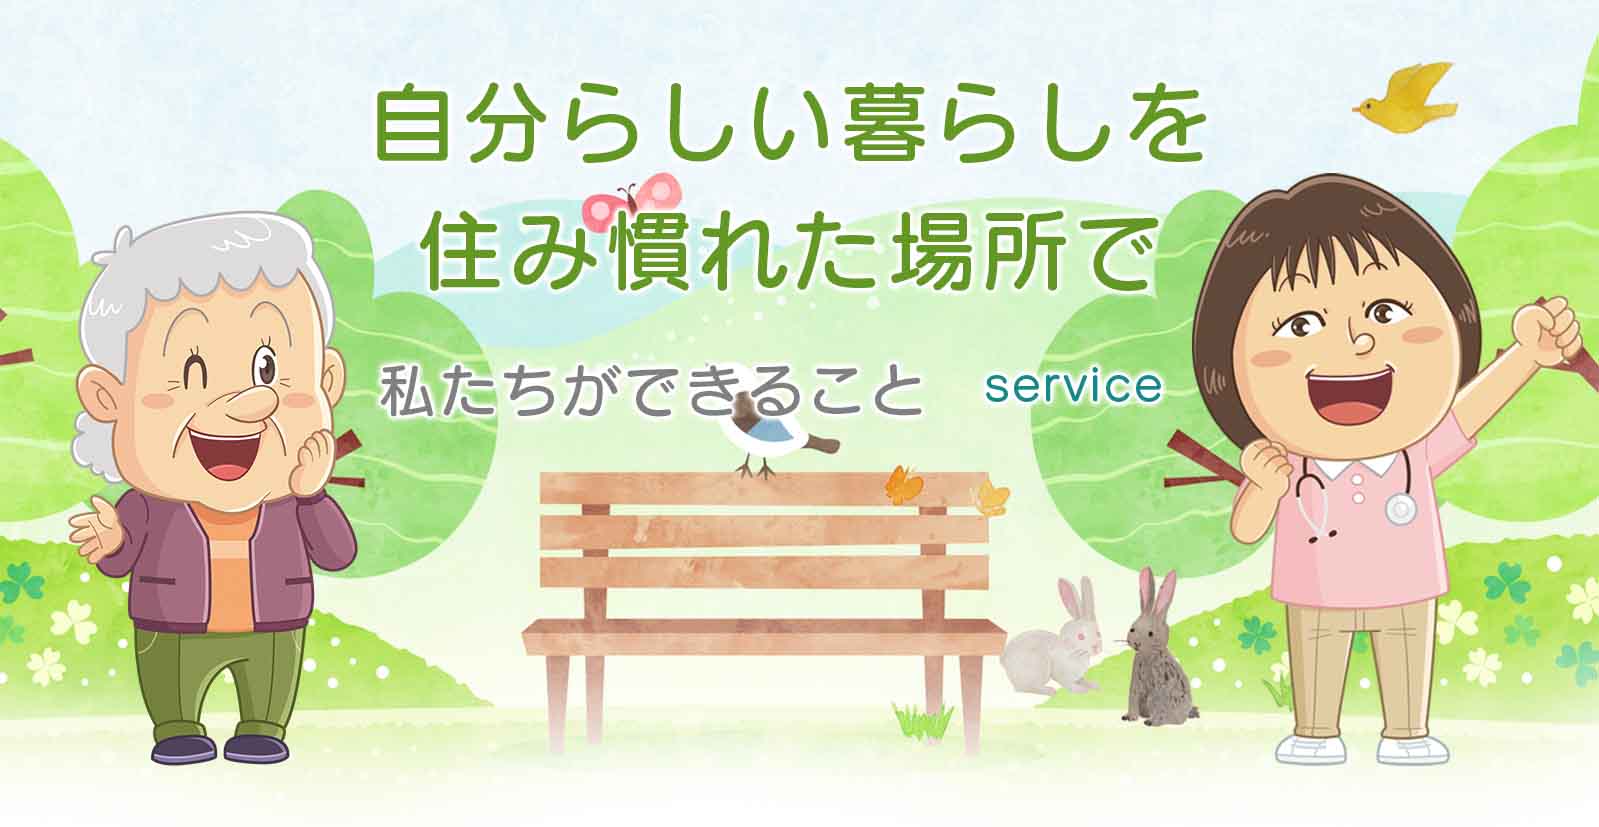 service_home_care_s